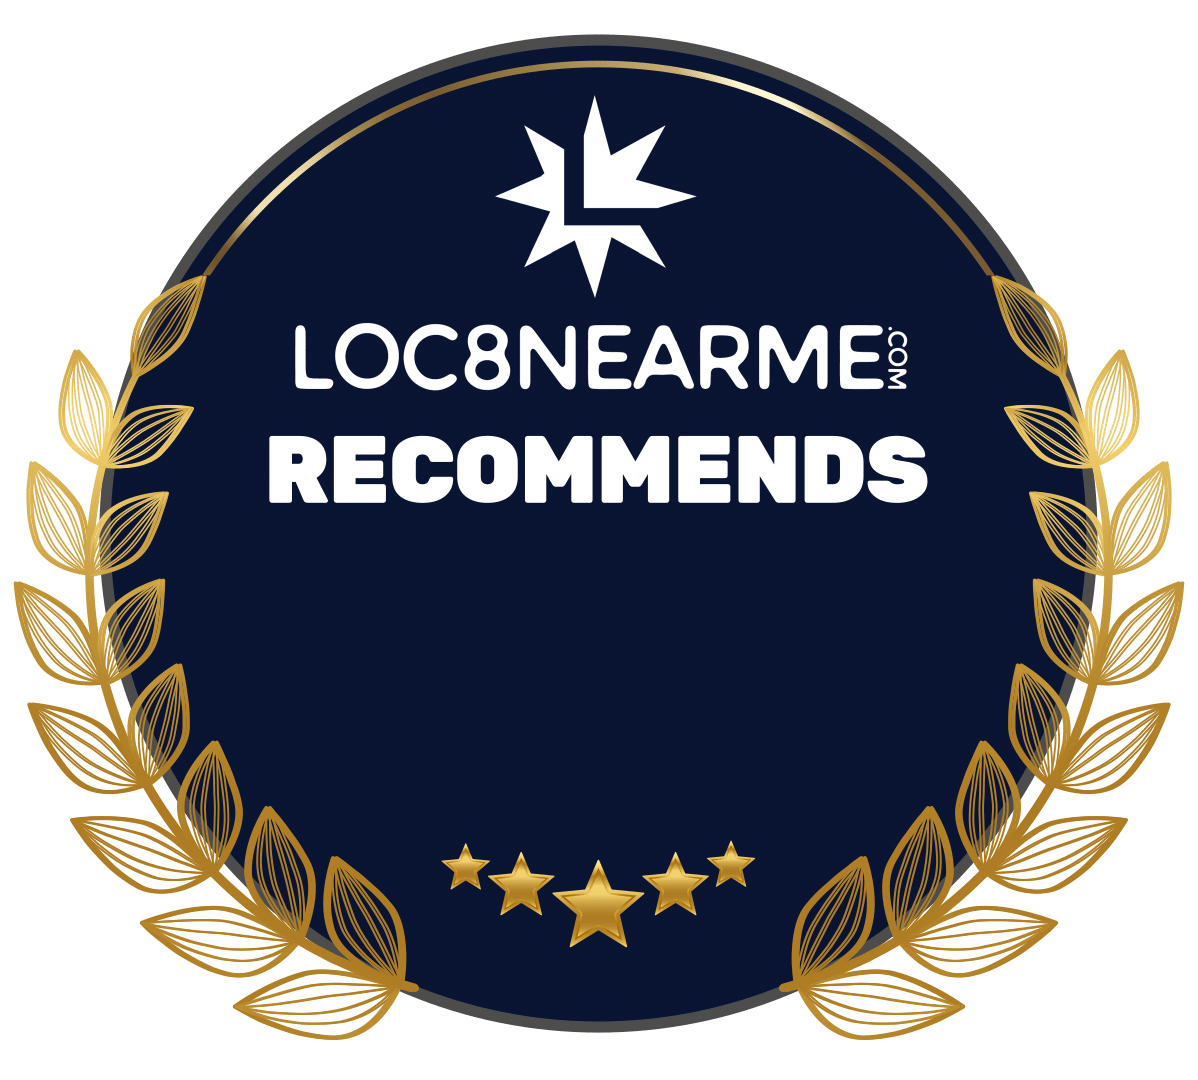 Loc8nearme recommendation badge